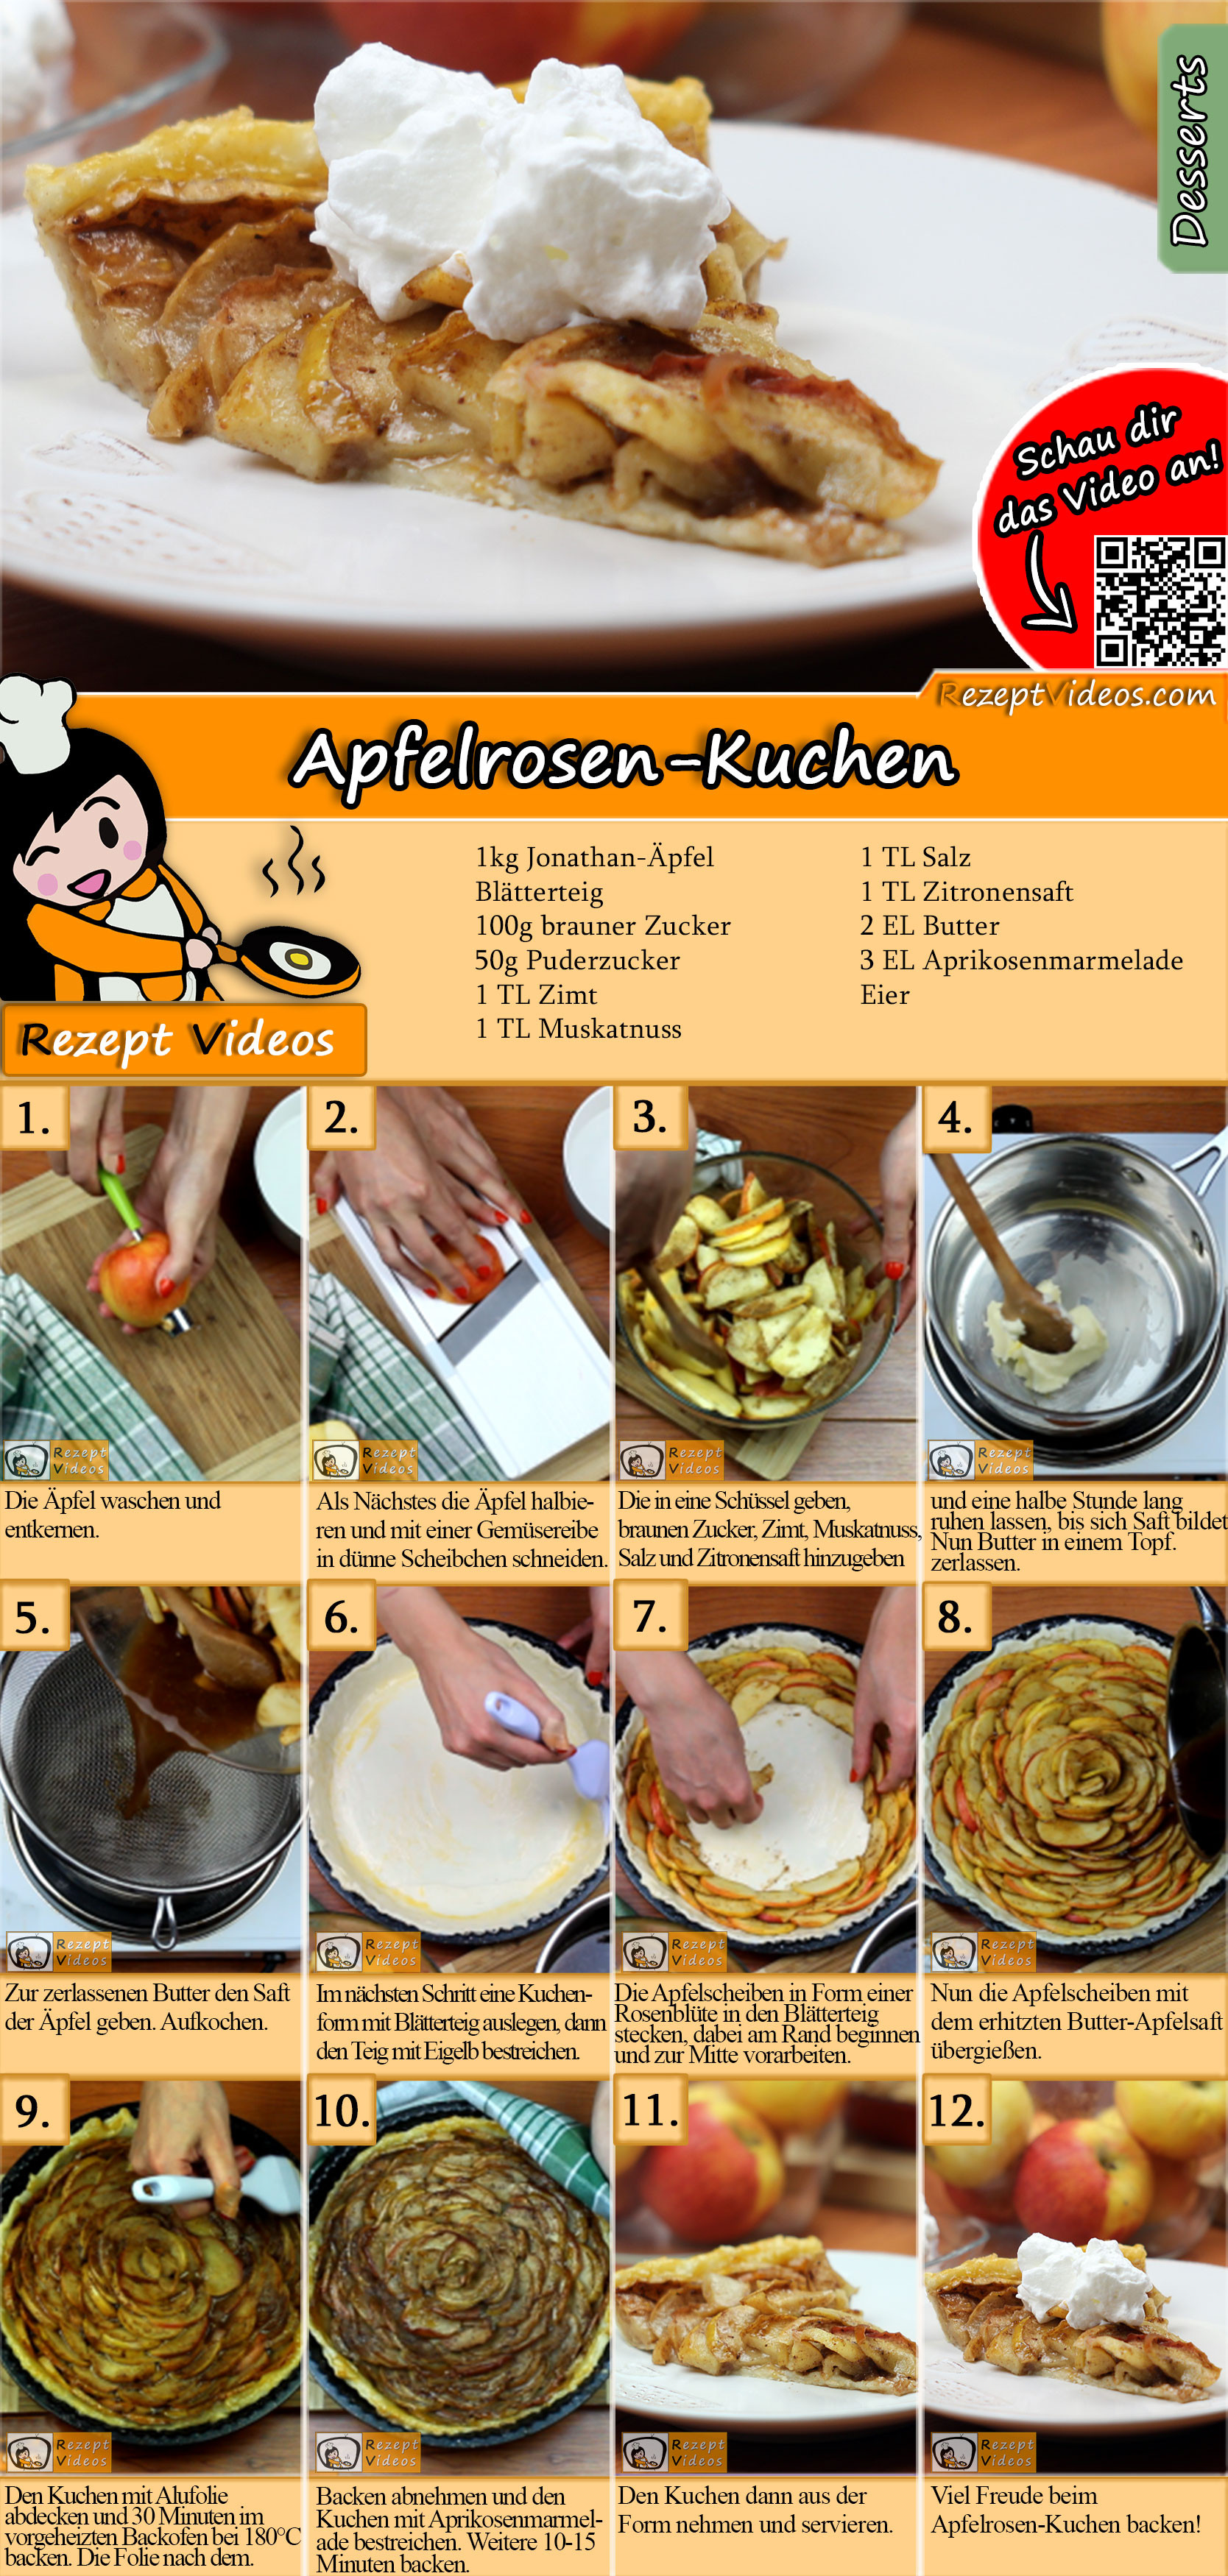 Apfelrosen-Kuchen Rezept mit Video